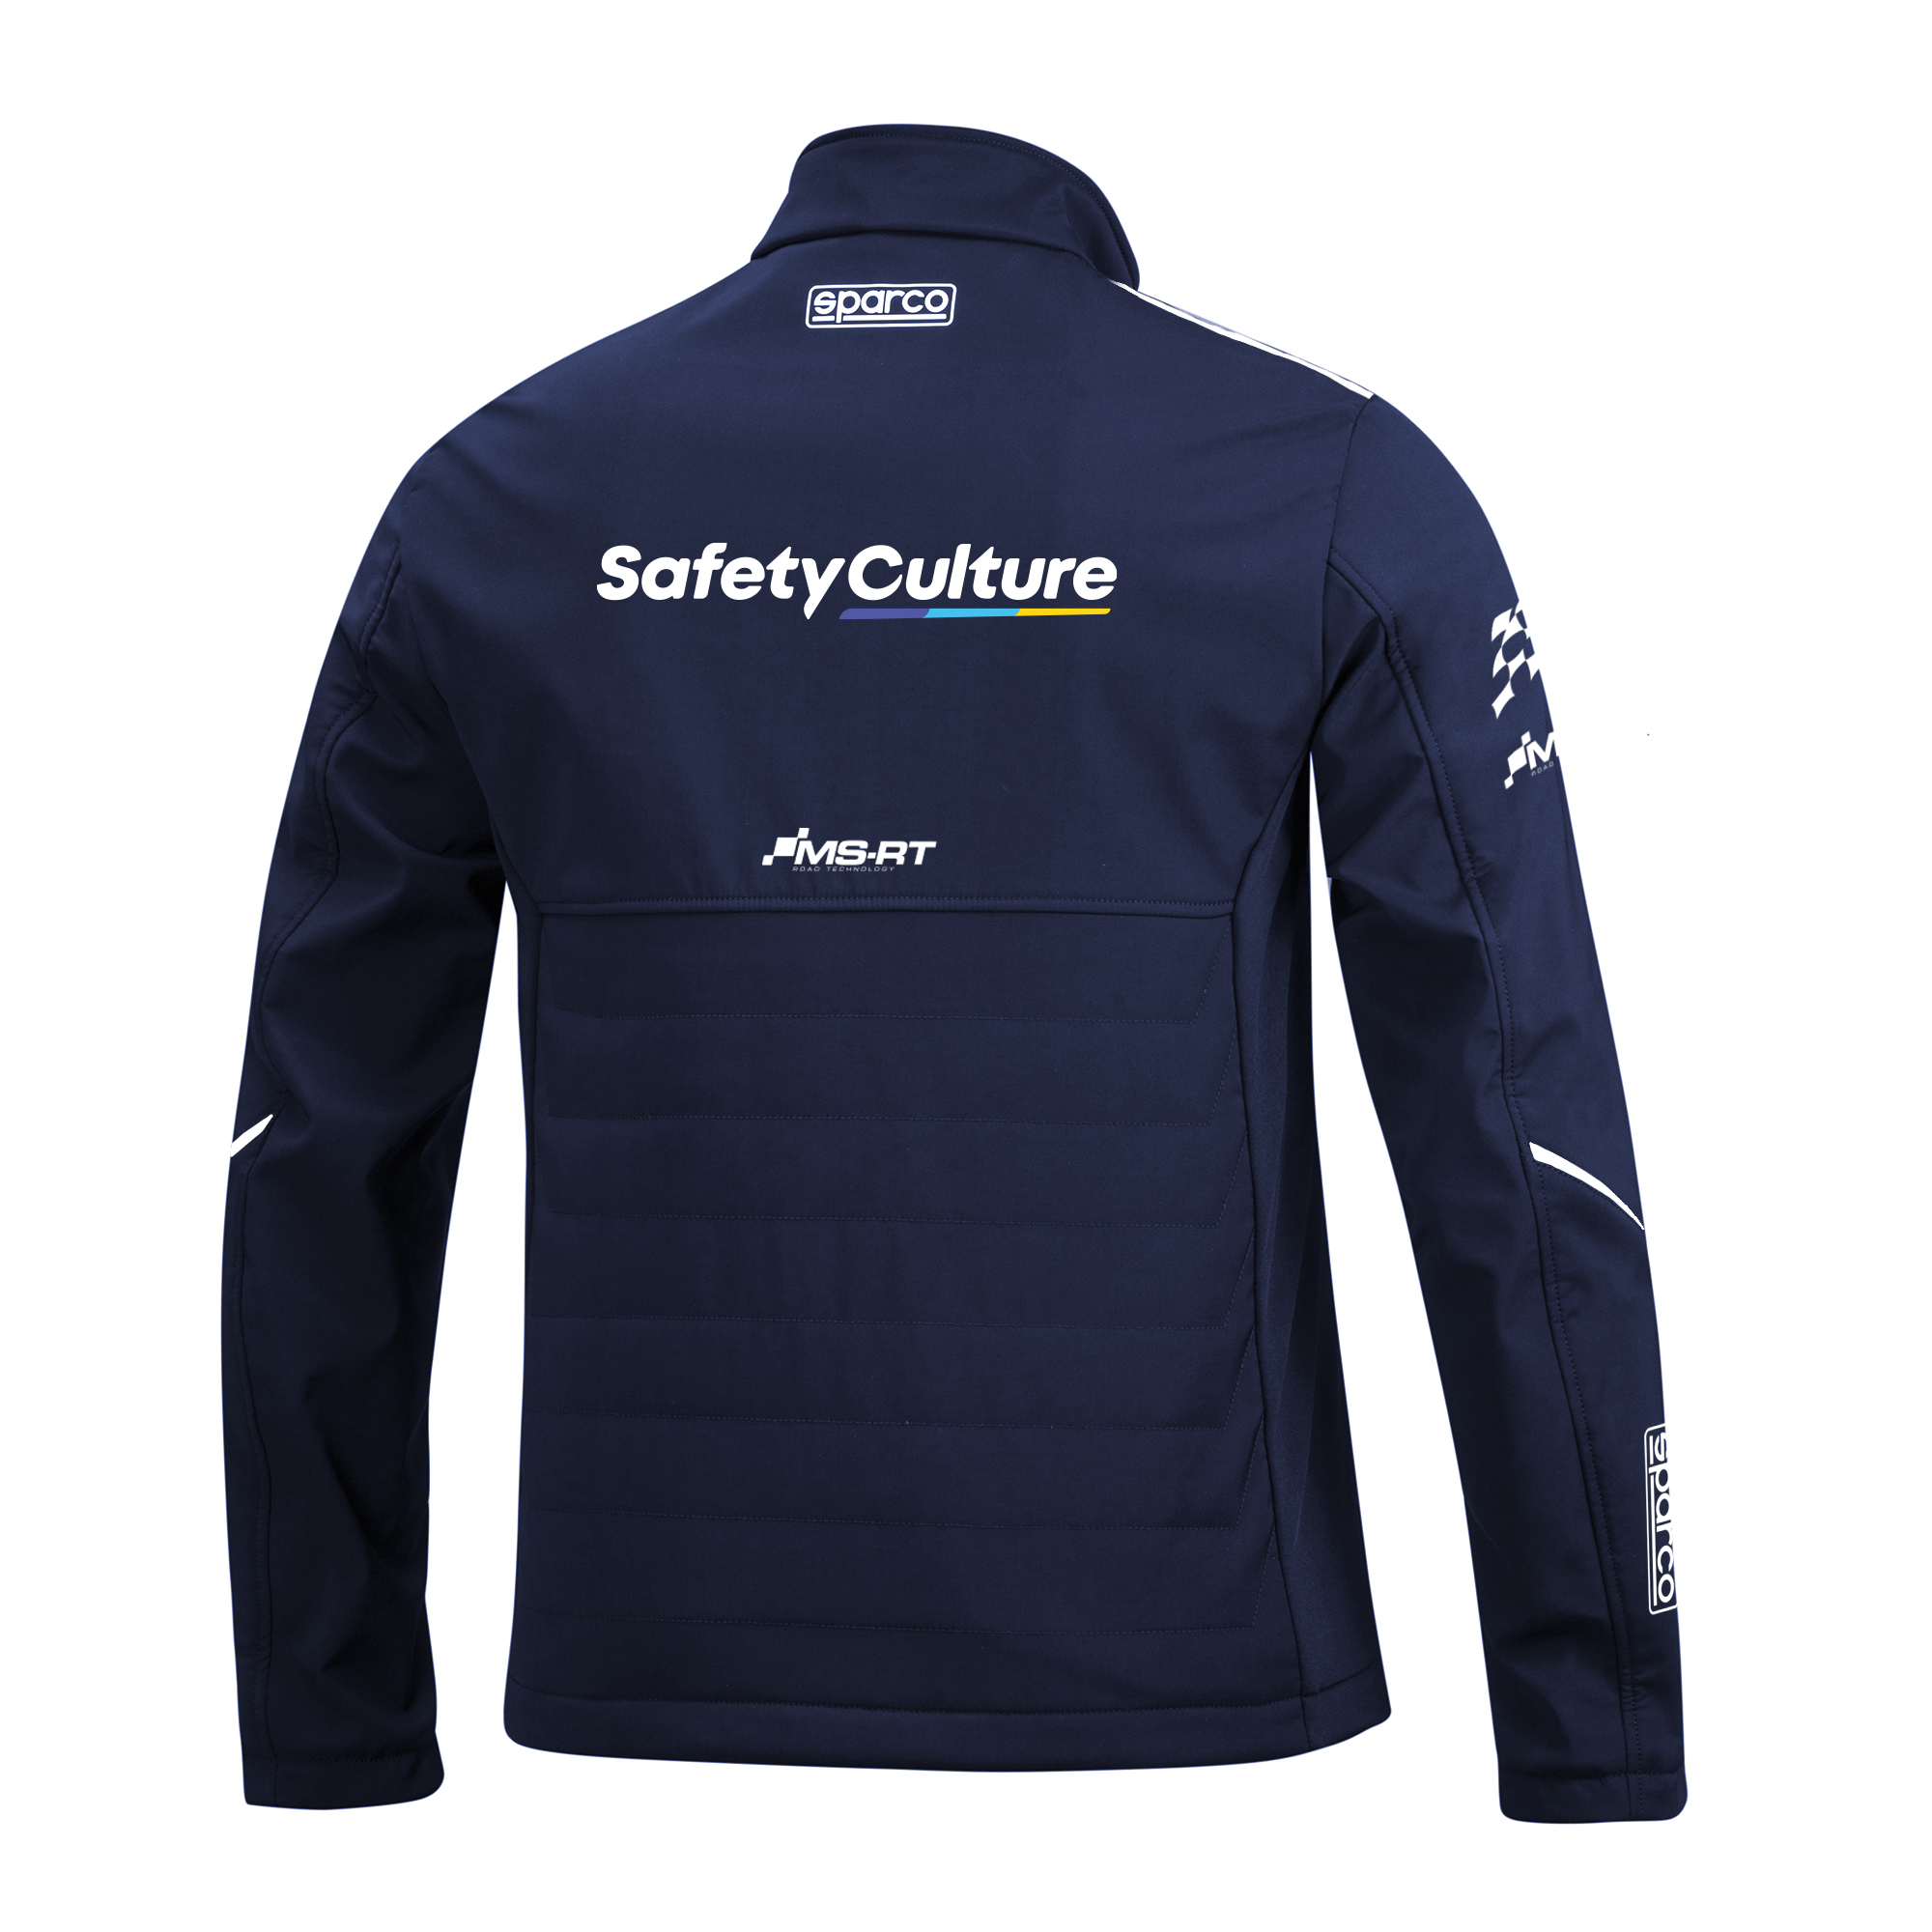 Sparco Ford M-Sport Official Teamwear Waterproof Softshell Jacket | eBay